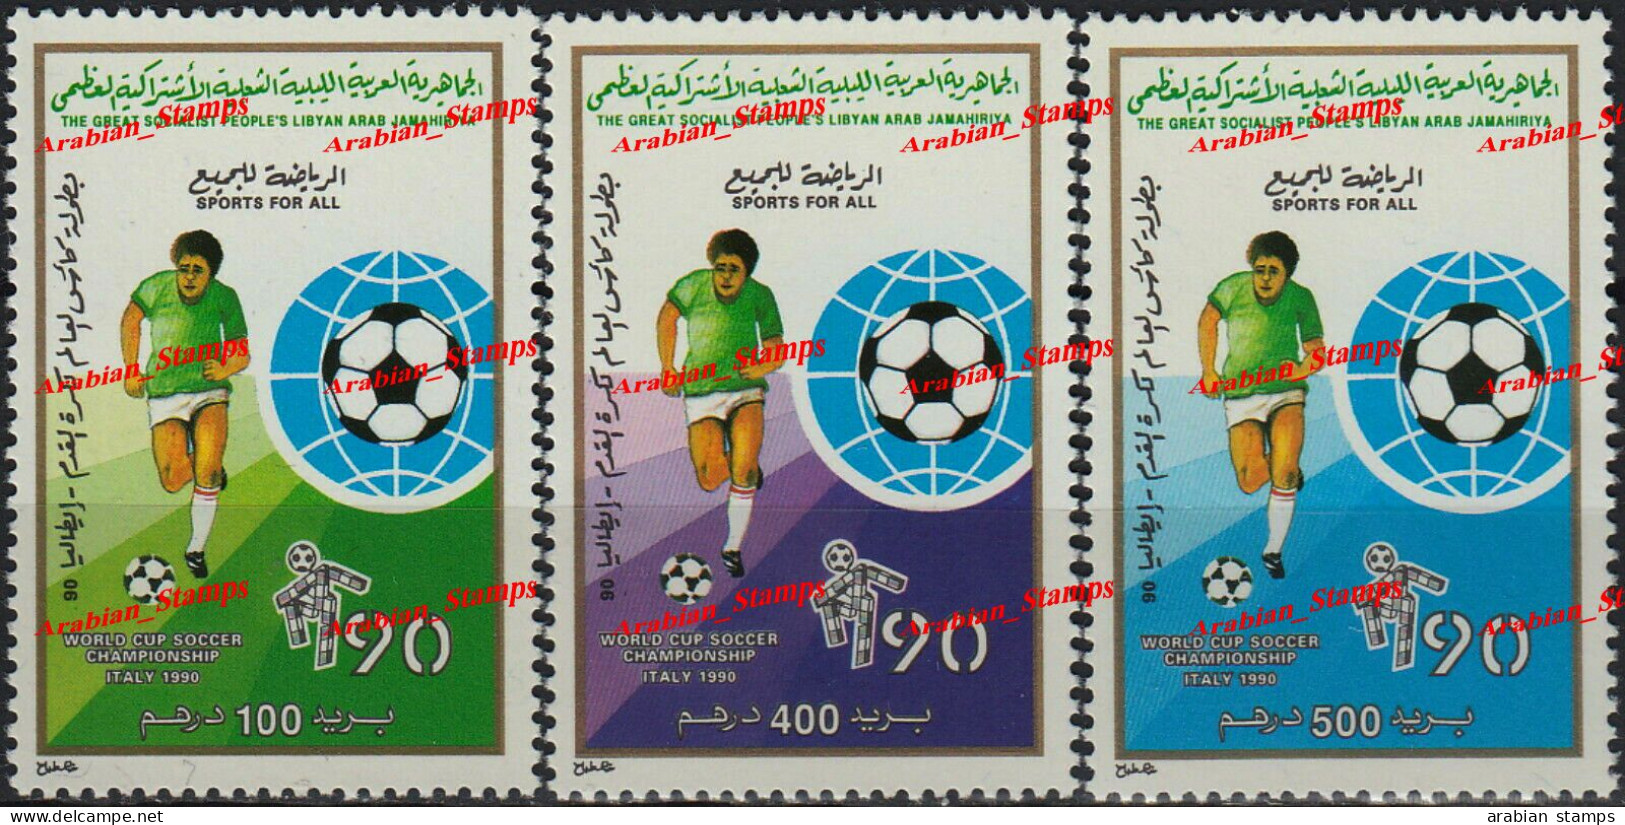 LIBYA 1990 SOCCER FOOTBALL WORLD CUP COUPE DU MONDE ITALY ITALIE SET MNH - Libië